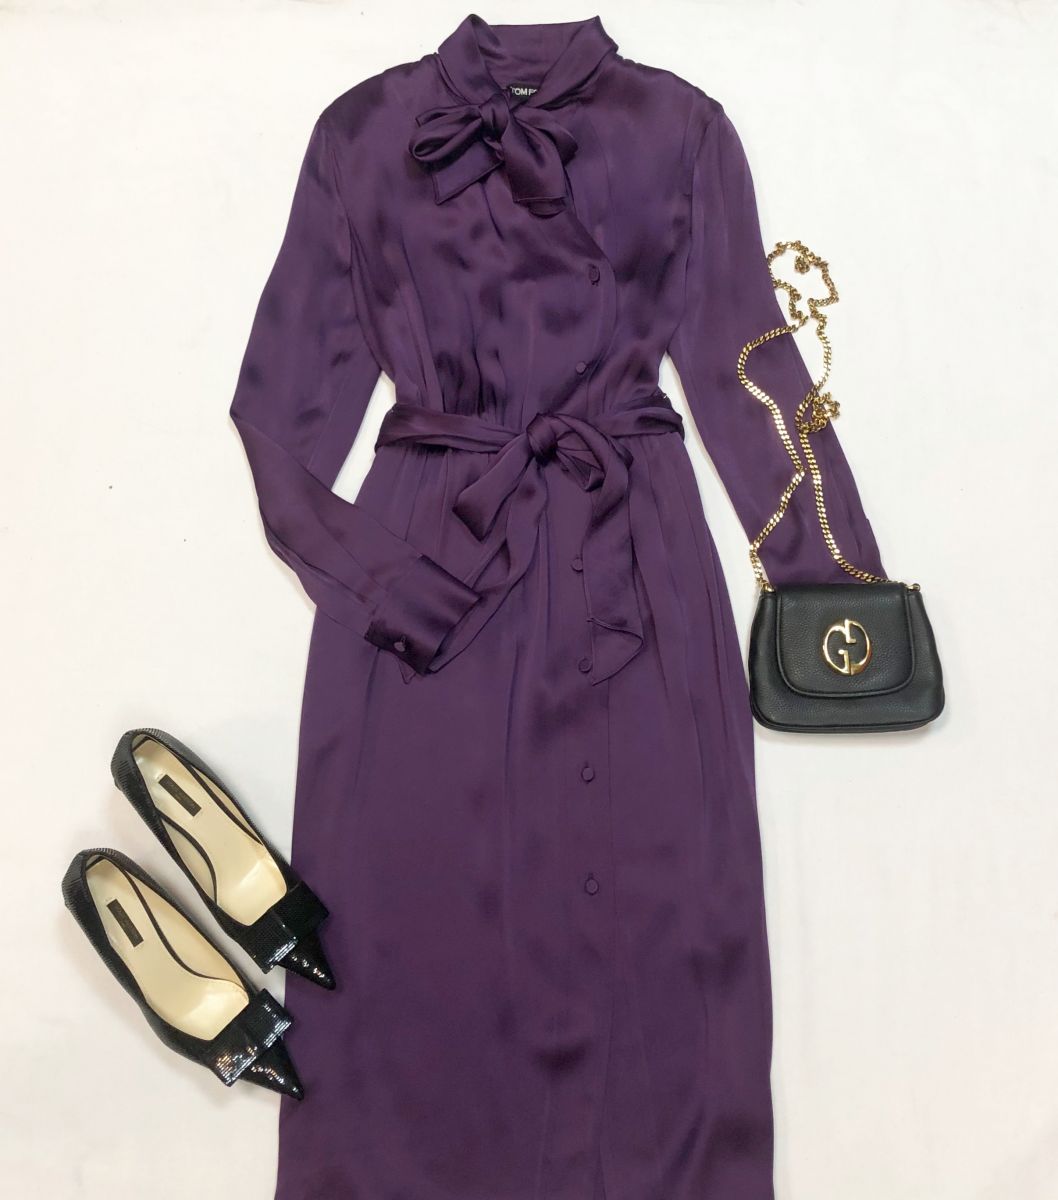 Платье Tom Ford размер 40 цена 23 078 руб
Туфли Louis Vuitton размер 38.5 цена 23 078 руб
Сумка Gucci